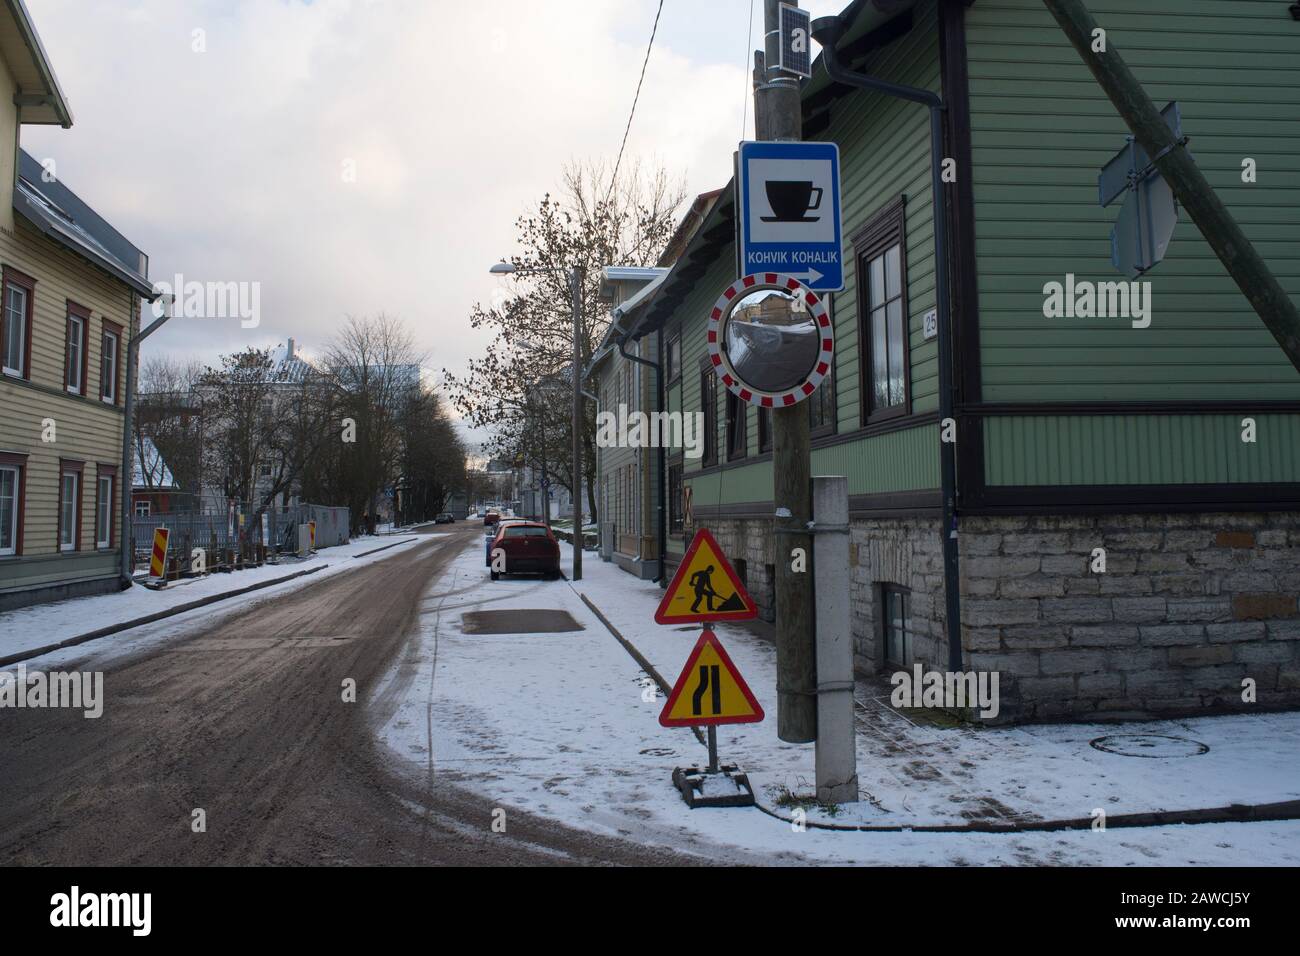 Koldu street , near Kohalik  restaurant, Uus Maailm (a subdistrict of the district of Kesklinn, Tallinn, the capital of Estonia. Stock Photo